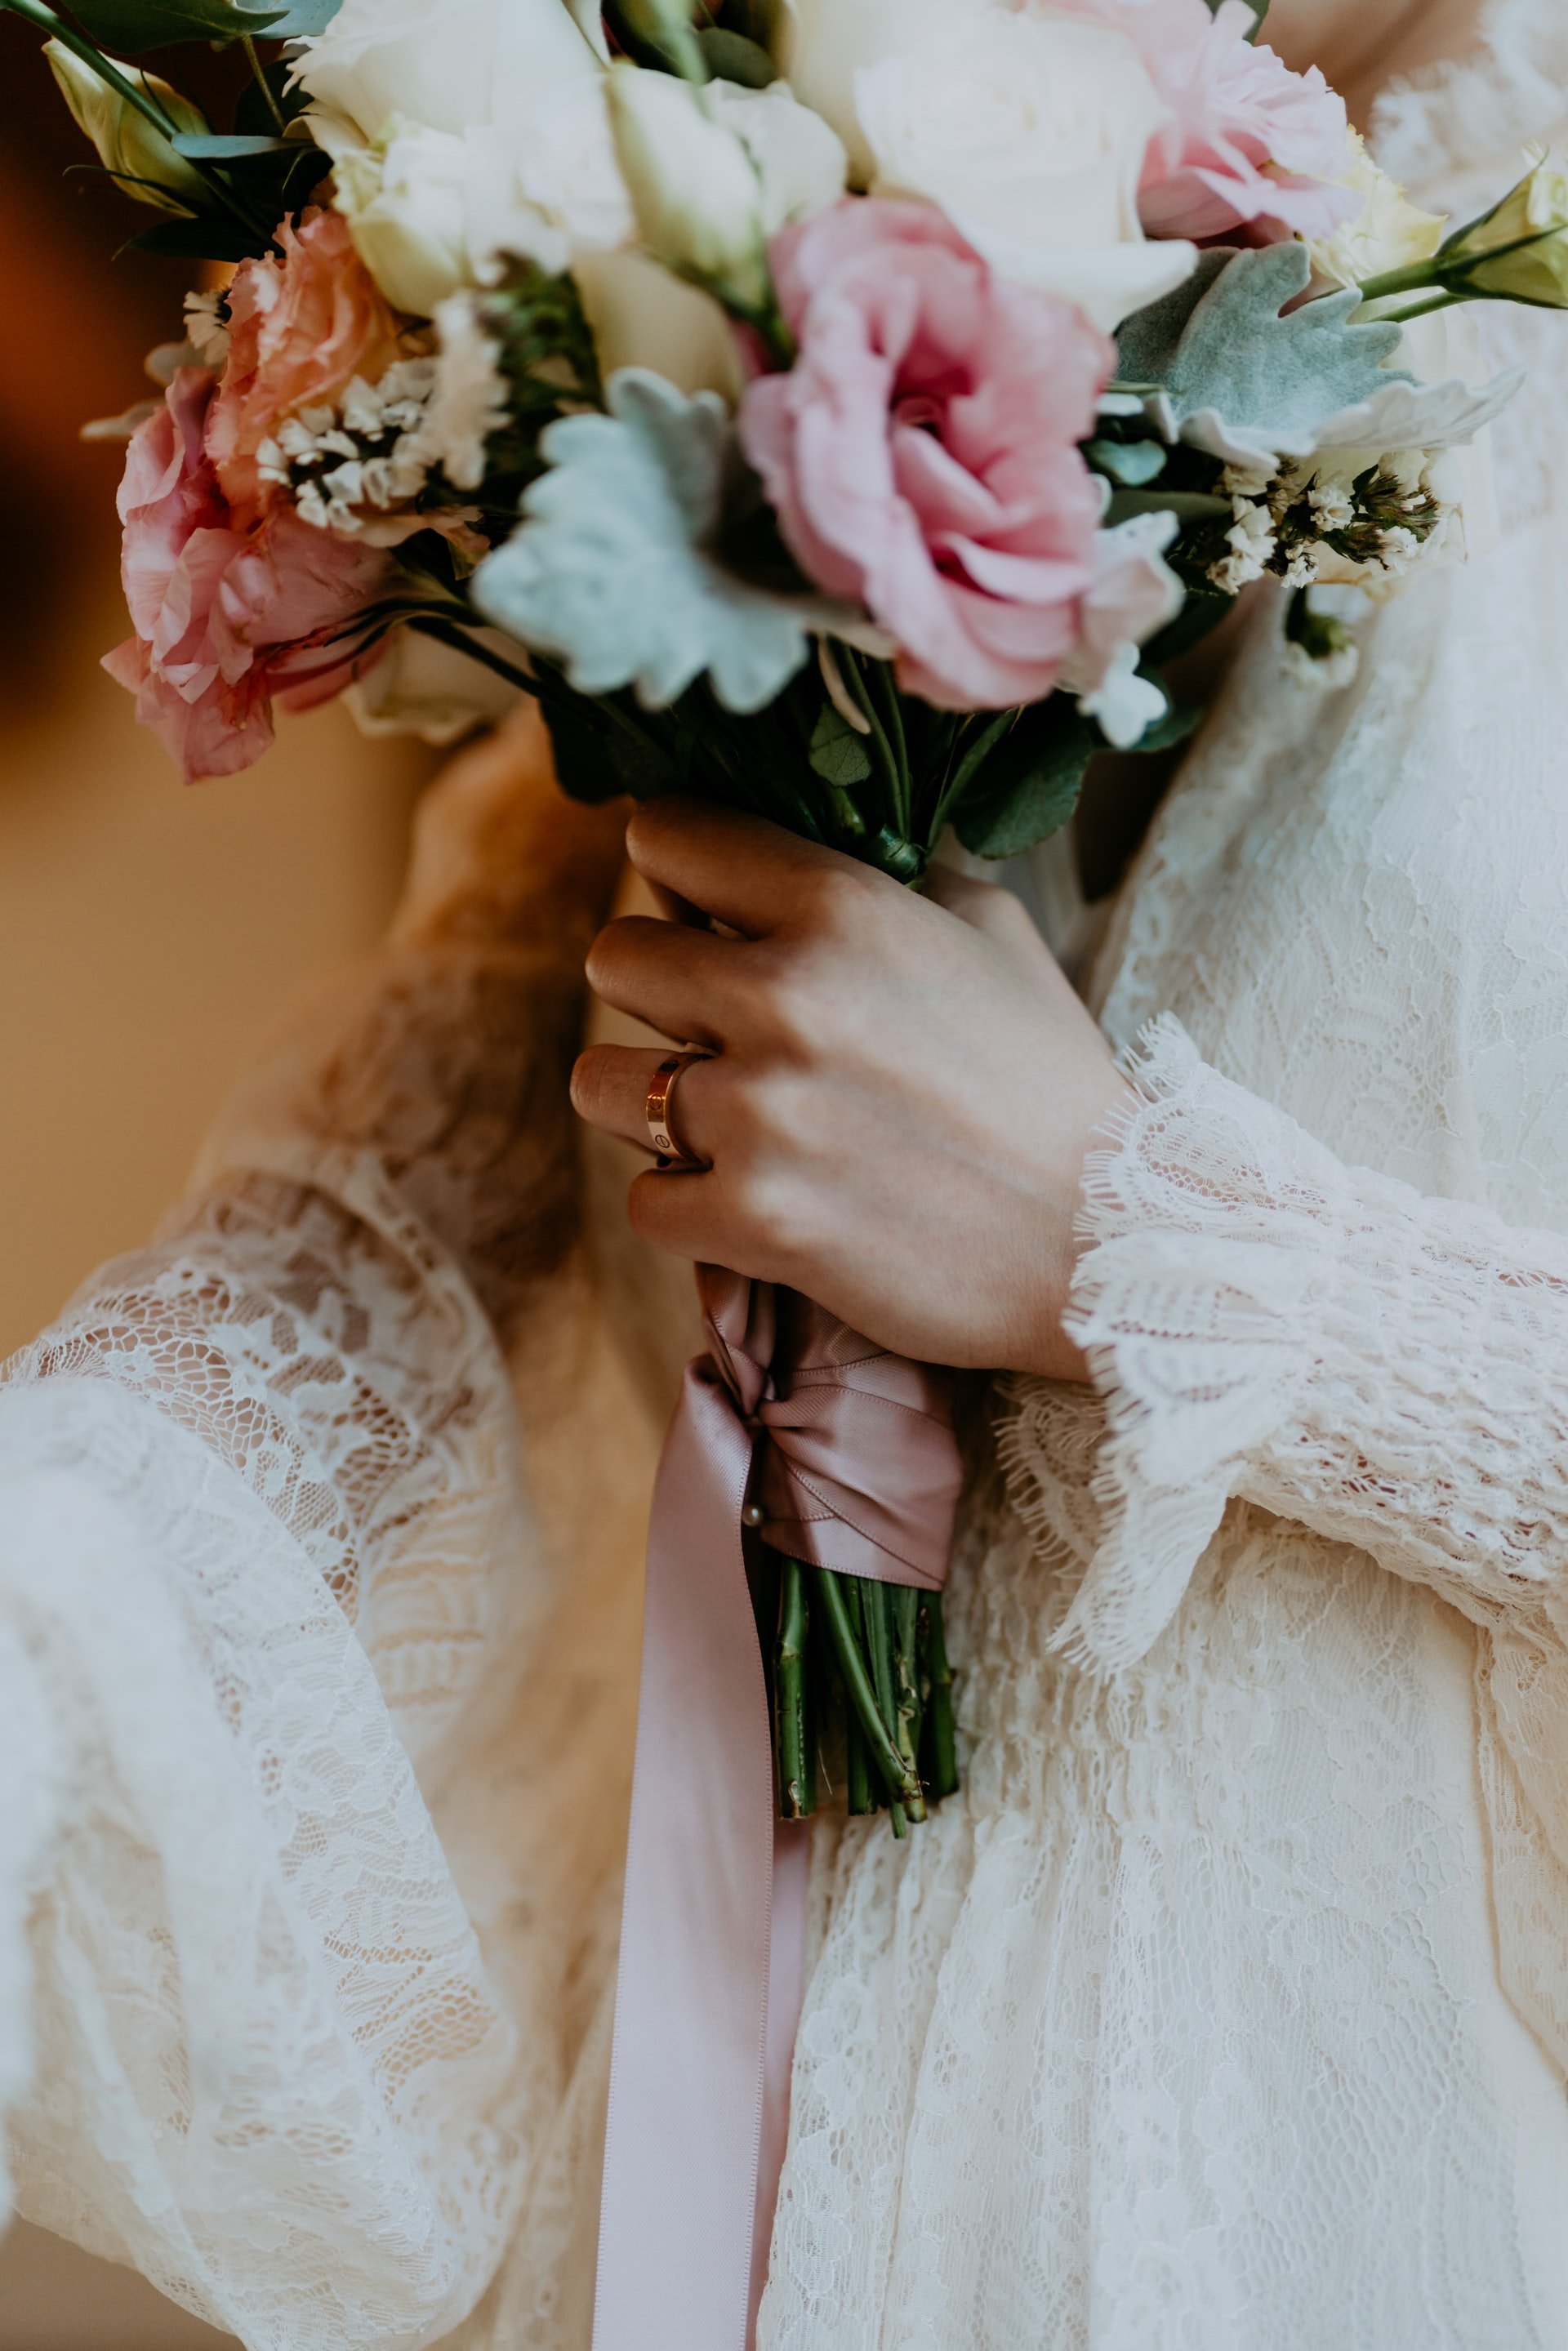 Bride holding flowers | Source: Unsplash